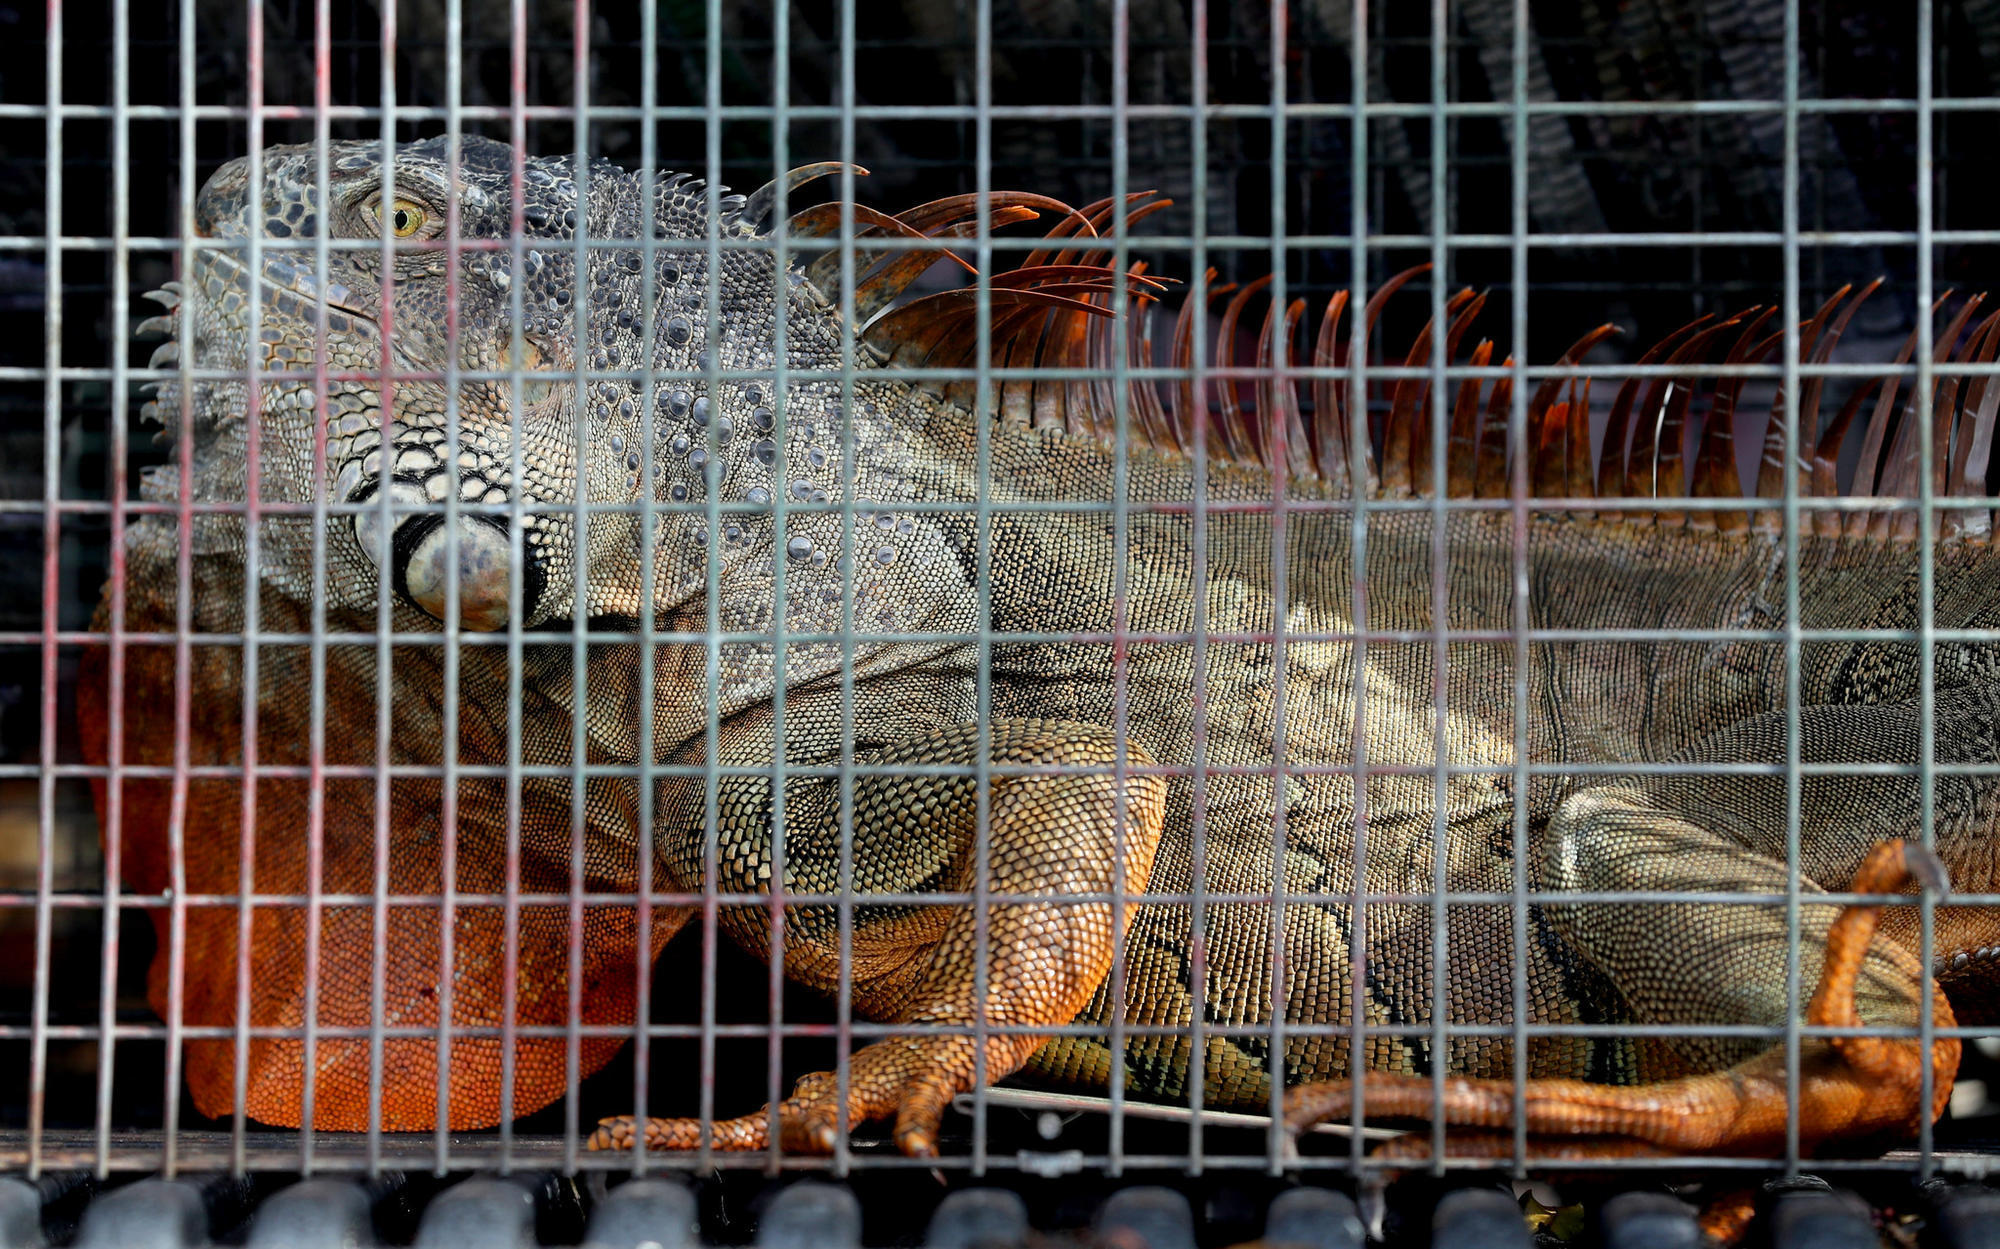 How to kill an iguana (legally) - Sun Sentinel